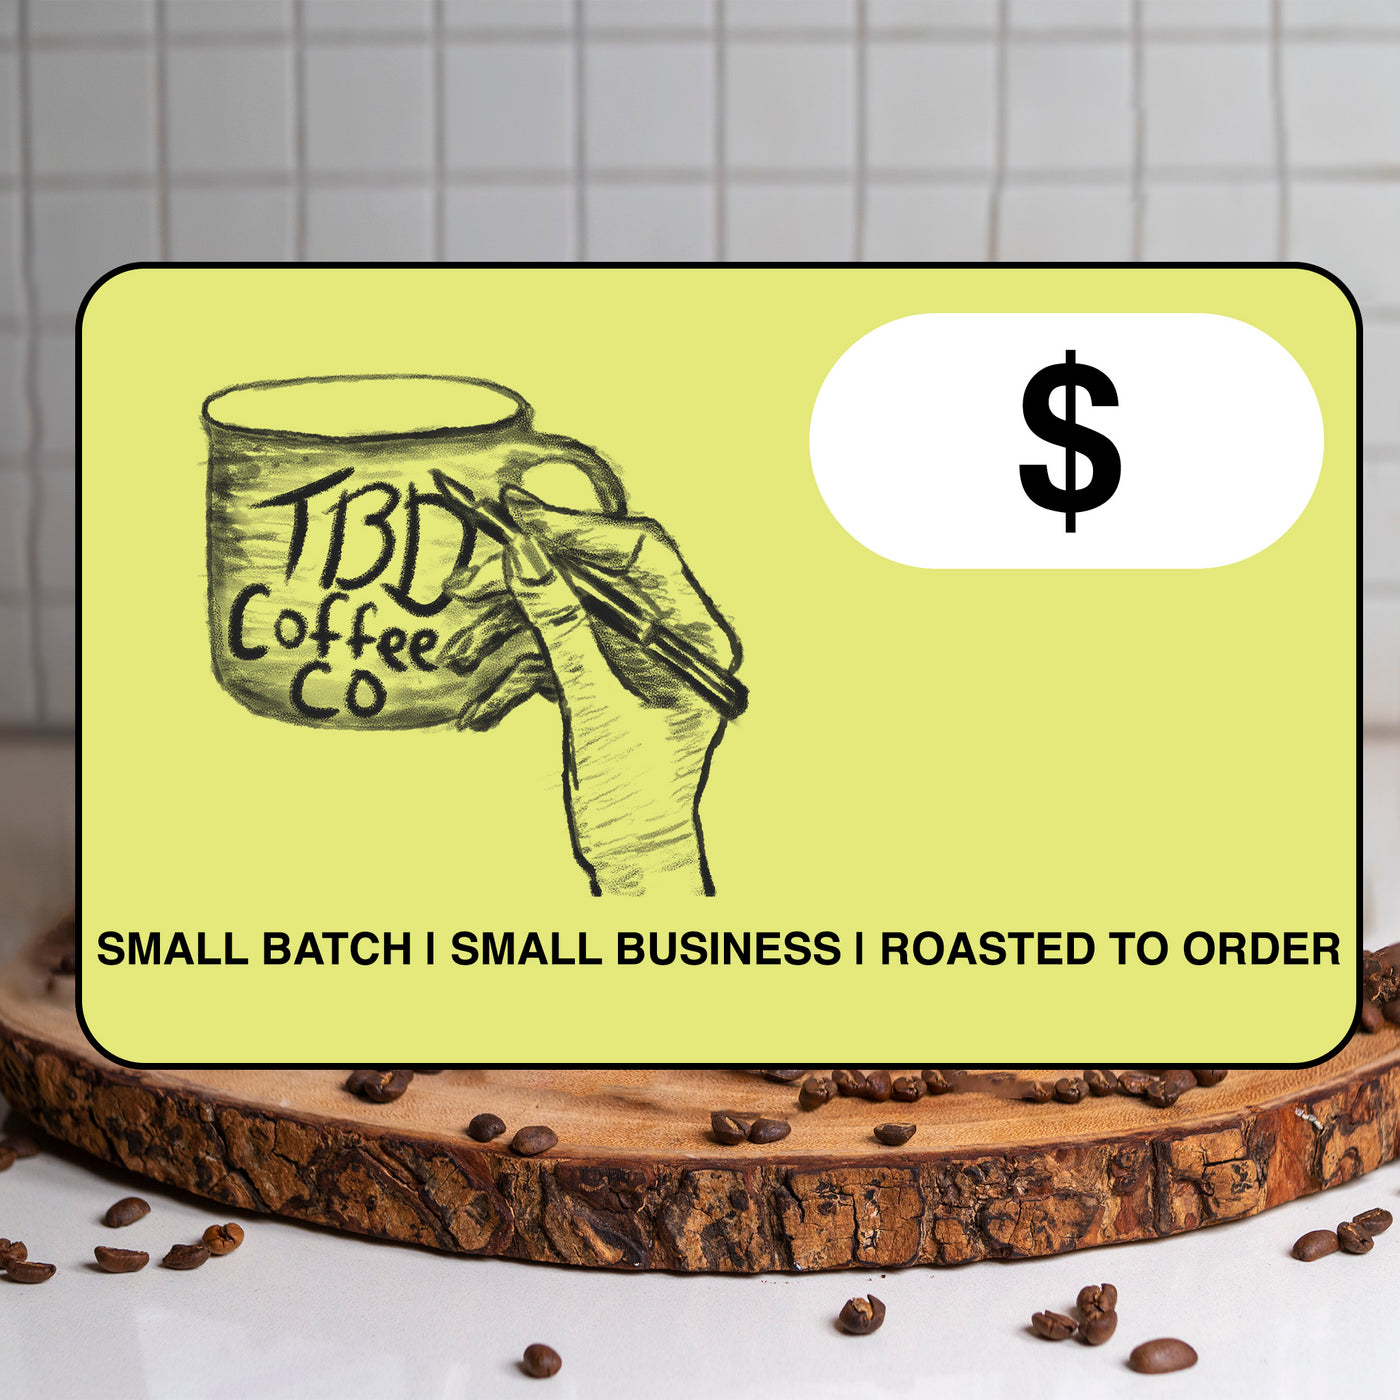 TBD Coffee Co Gift Card